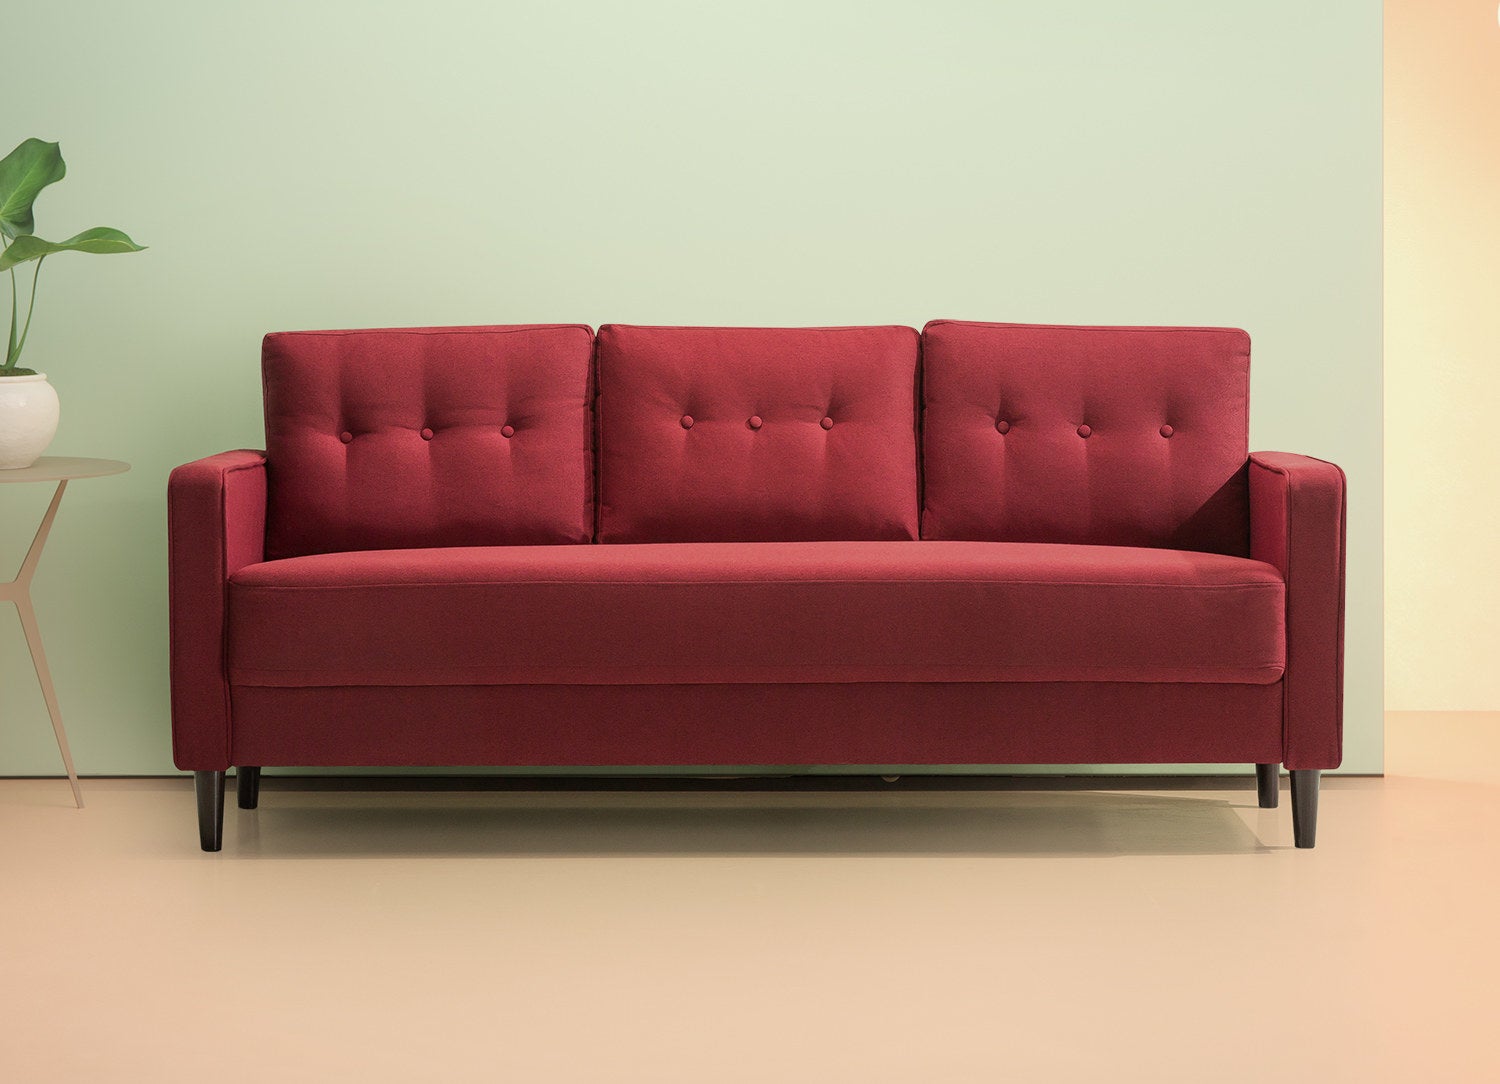 Red mid-century sofa